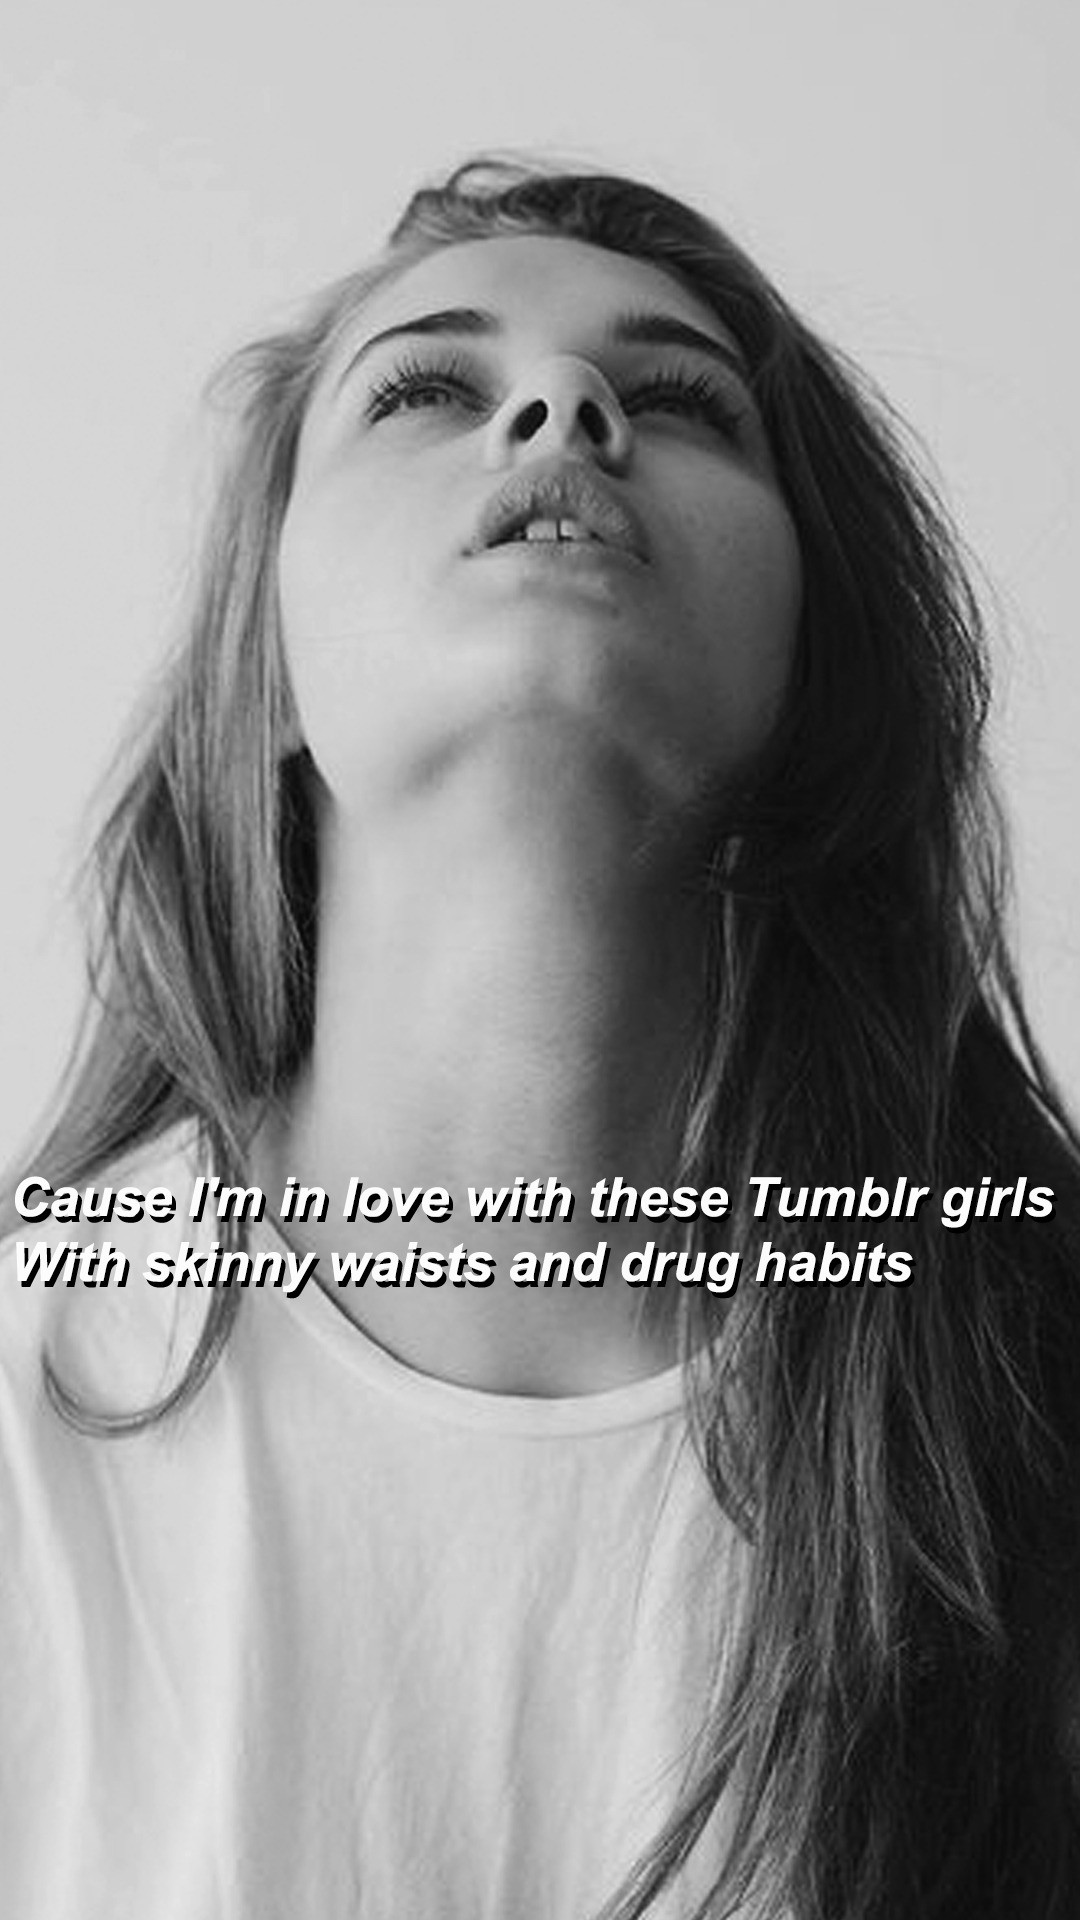 Tumblr girls g-Eazy.